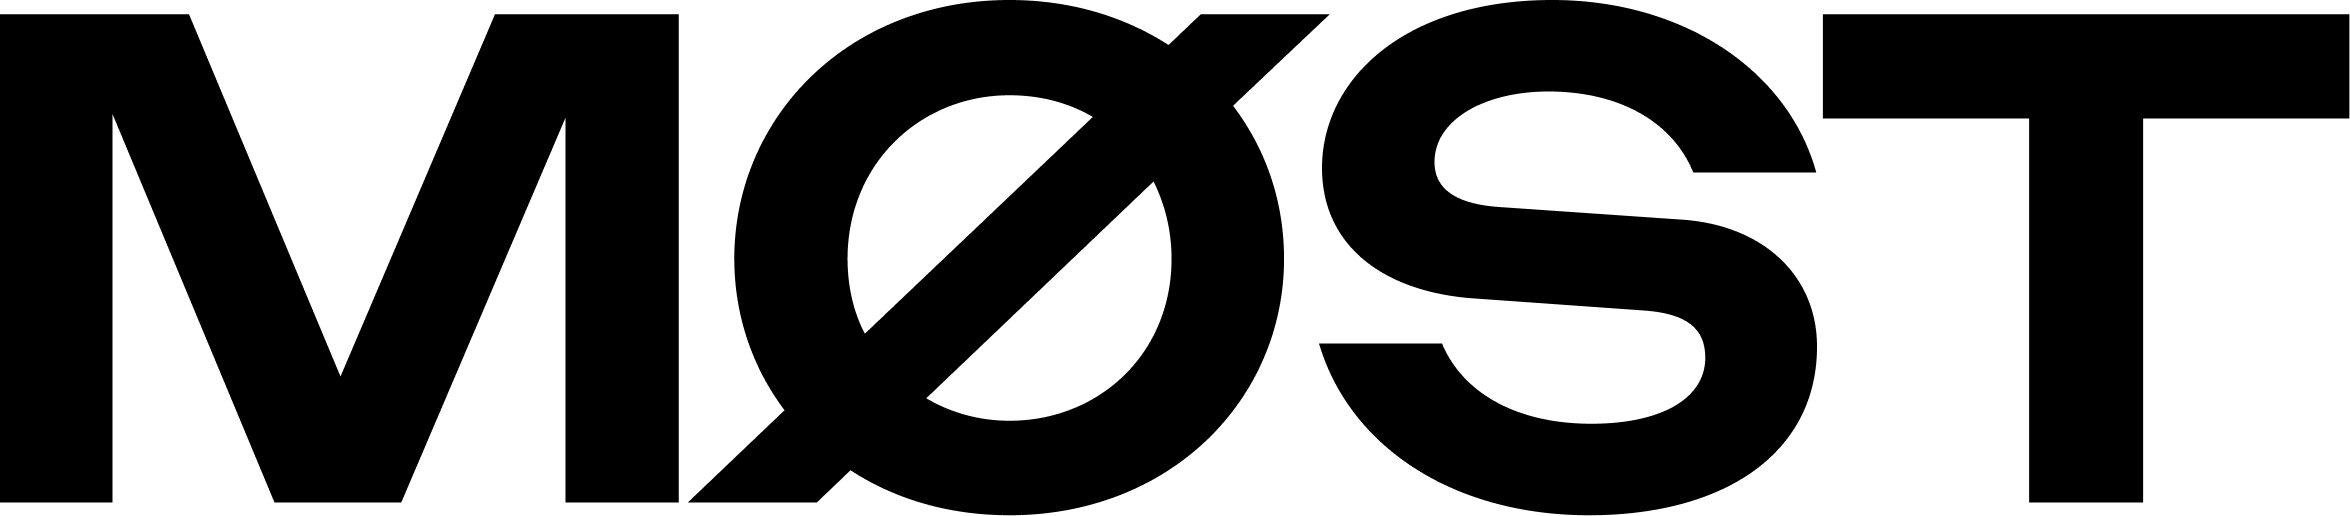 Møst logo